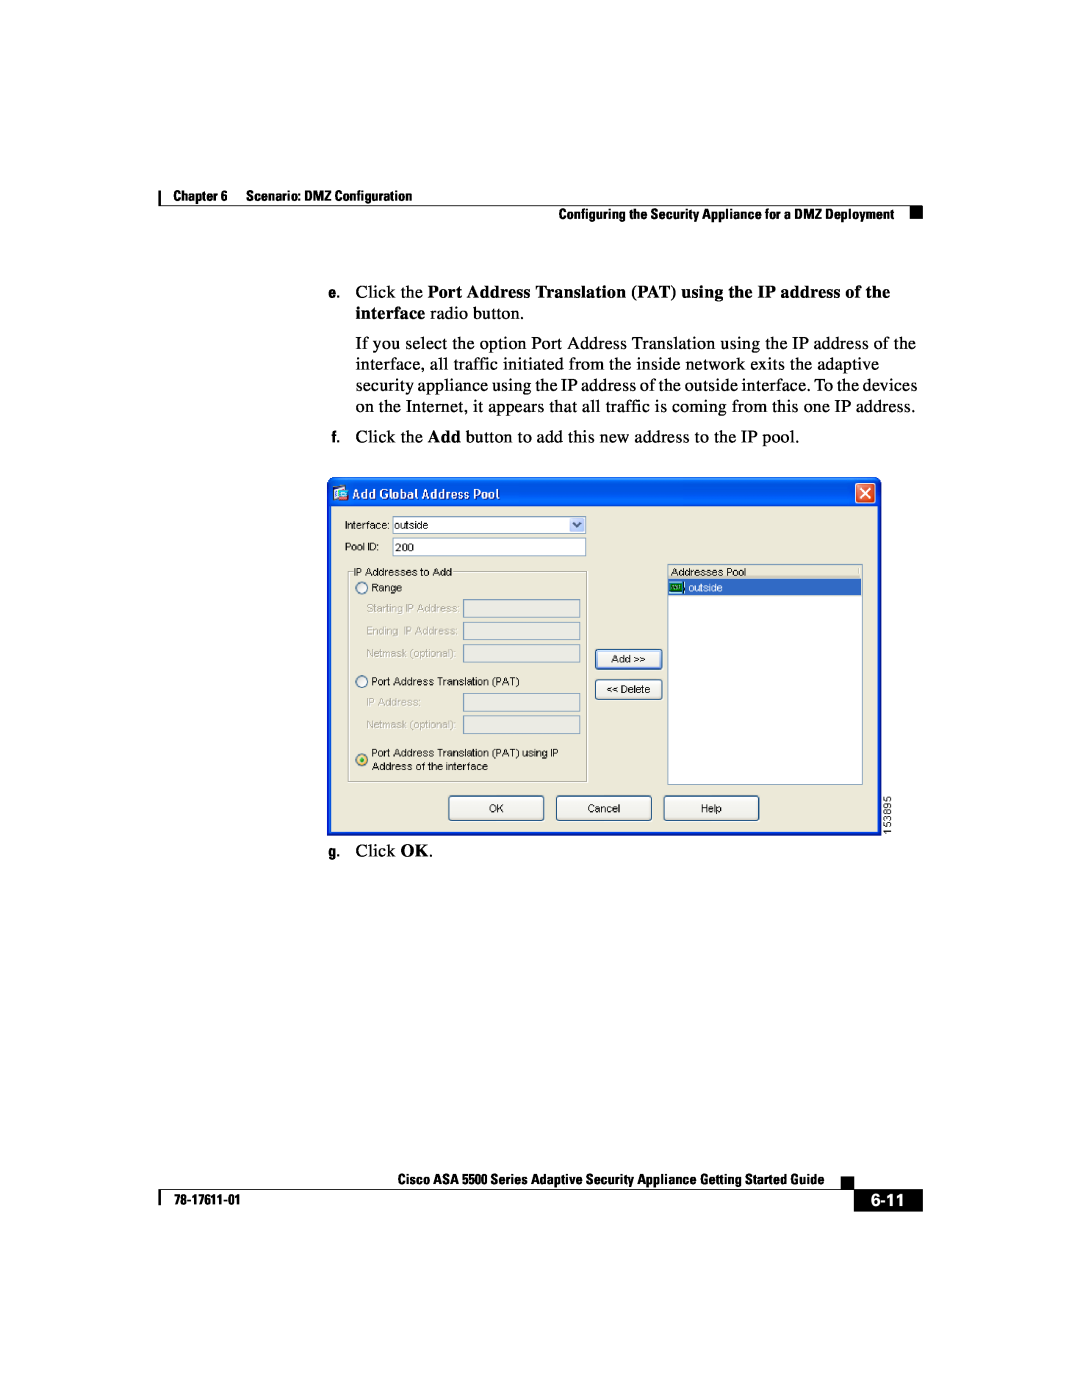 Cisco Systems ASA 5500 manual g.Click OK, 6-11 